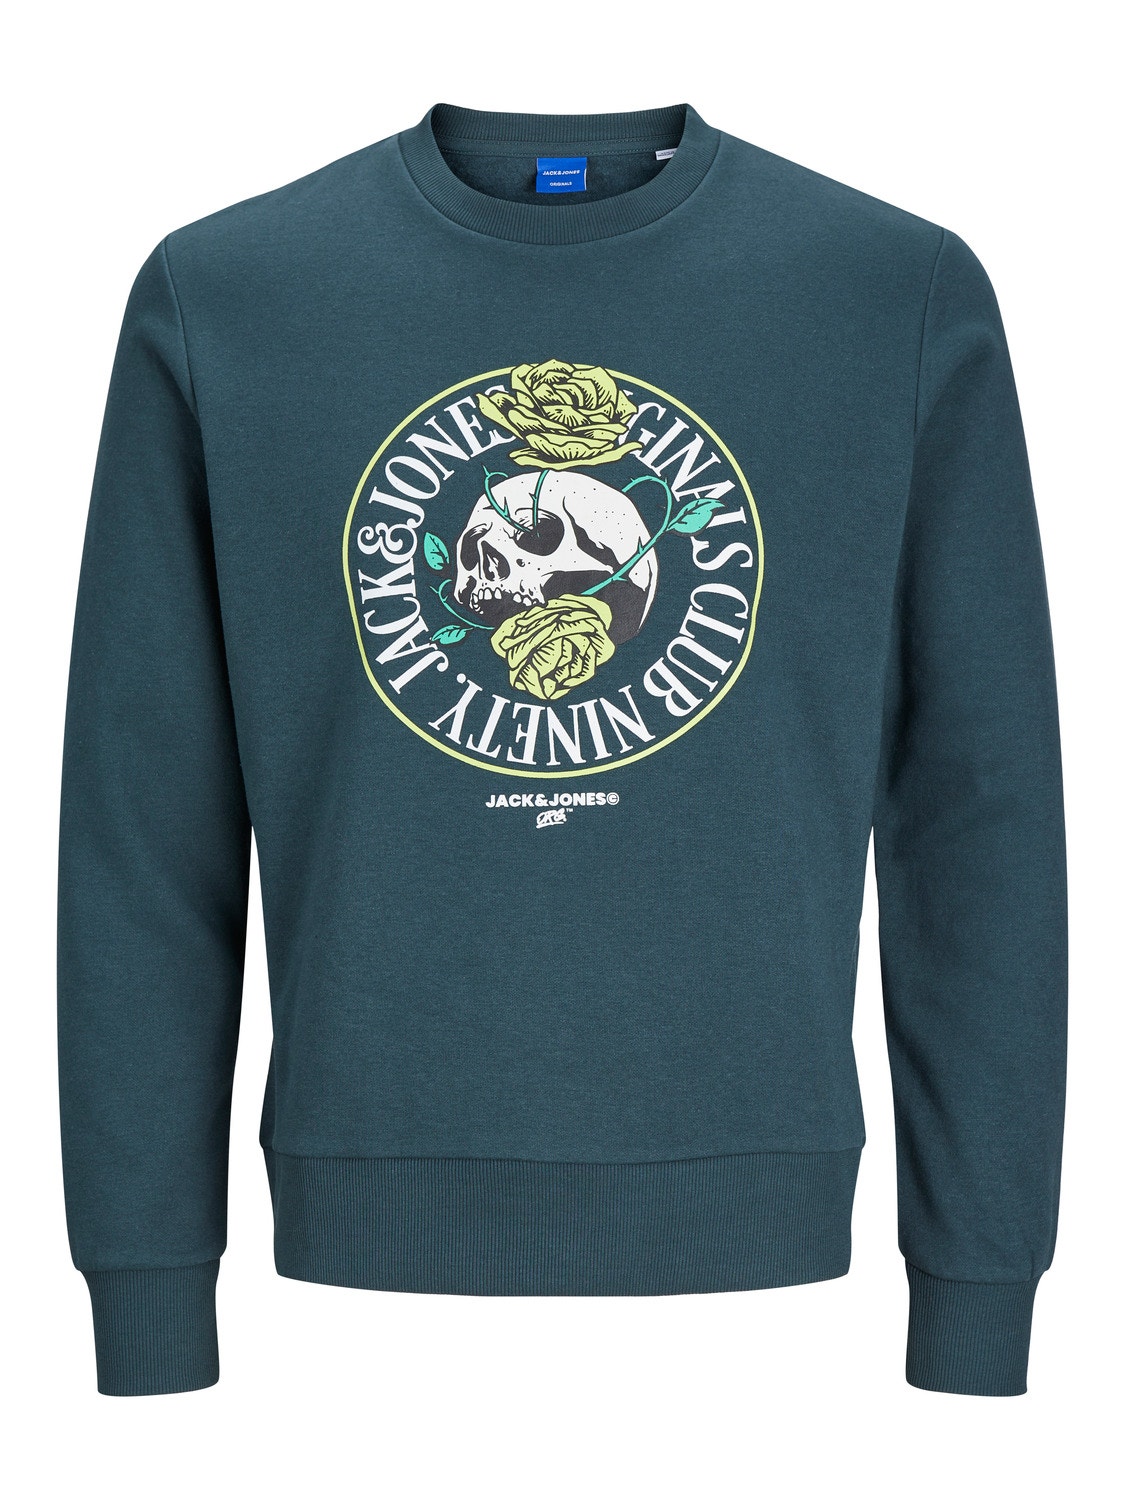 Jack & Jones Printed Crewn Neck Sweatshirt -Magical Forest - 12244220